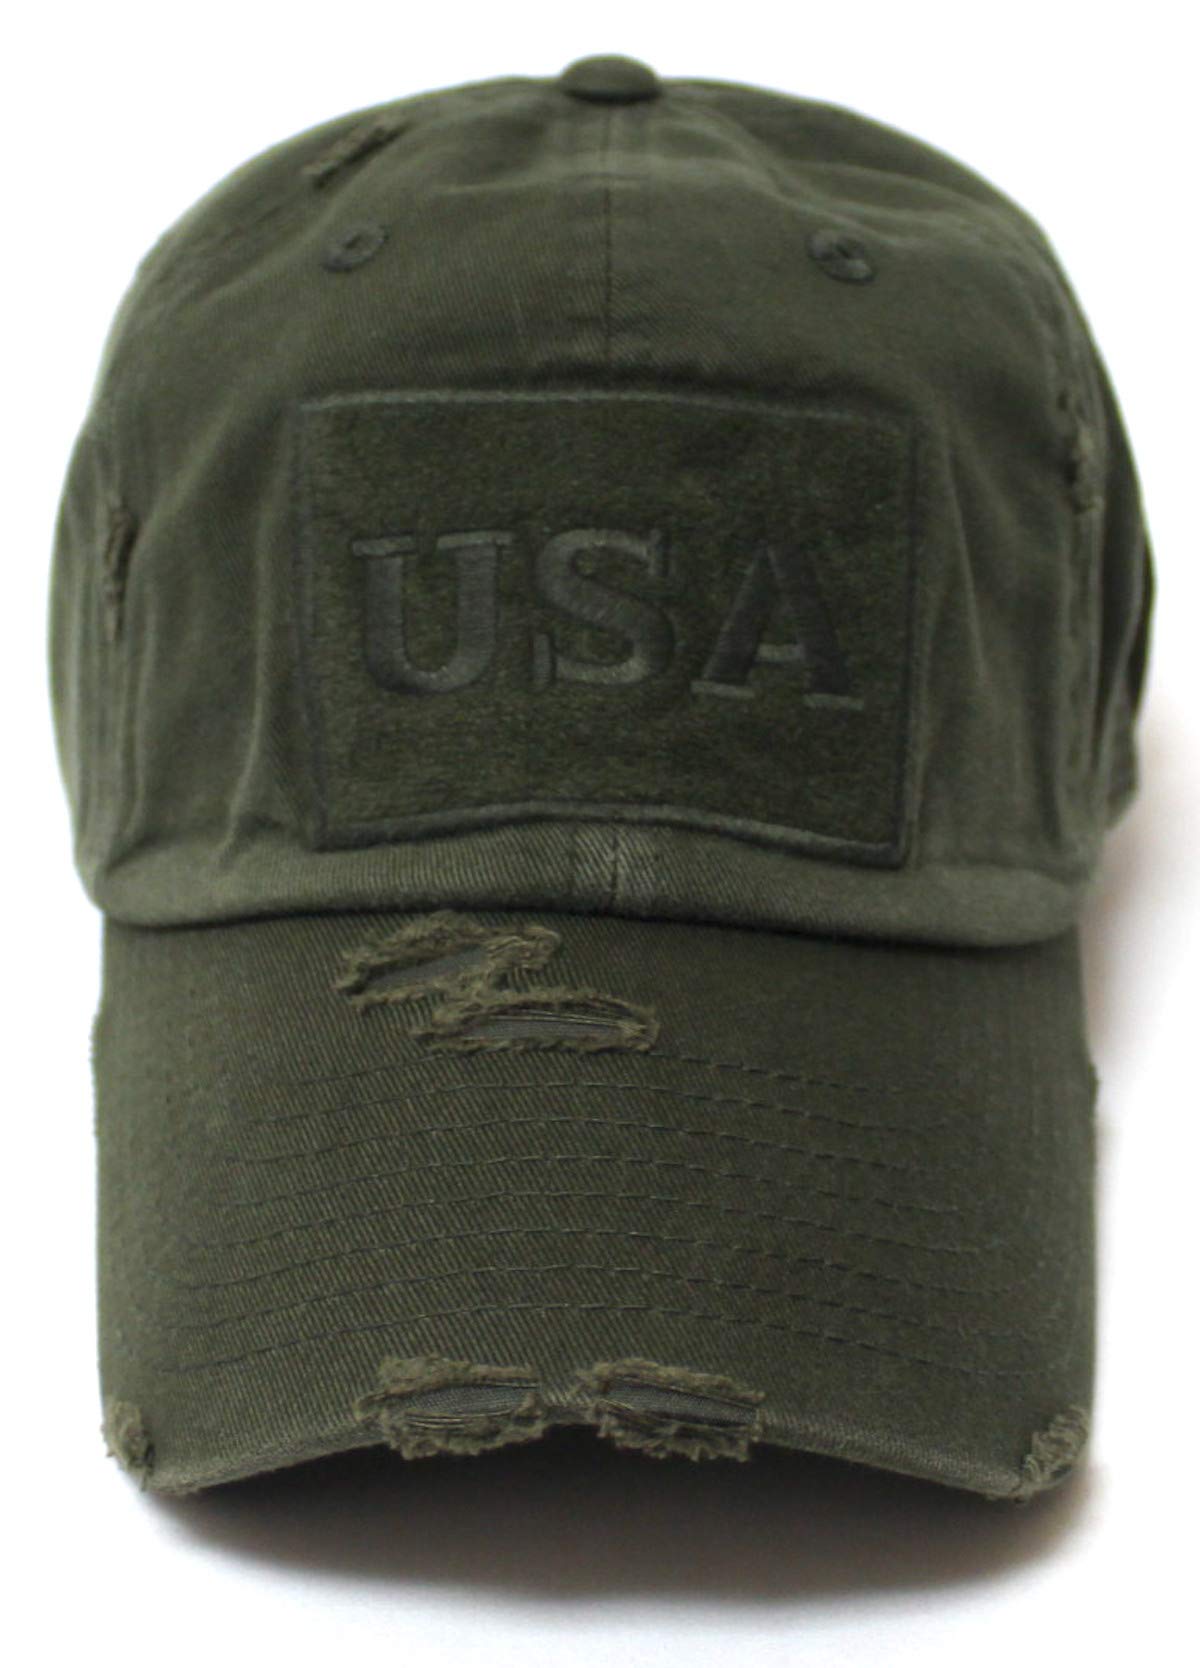 CAPS 'N VINTAGE Distressed USA American Flag Monogram Embroidery Adjustable Hat, Washed Army Green - Caps 'N Vintage 